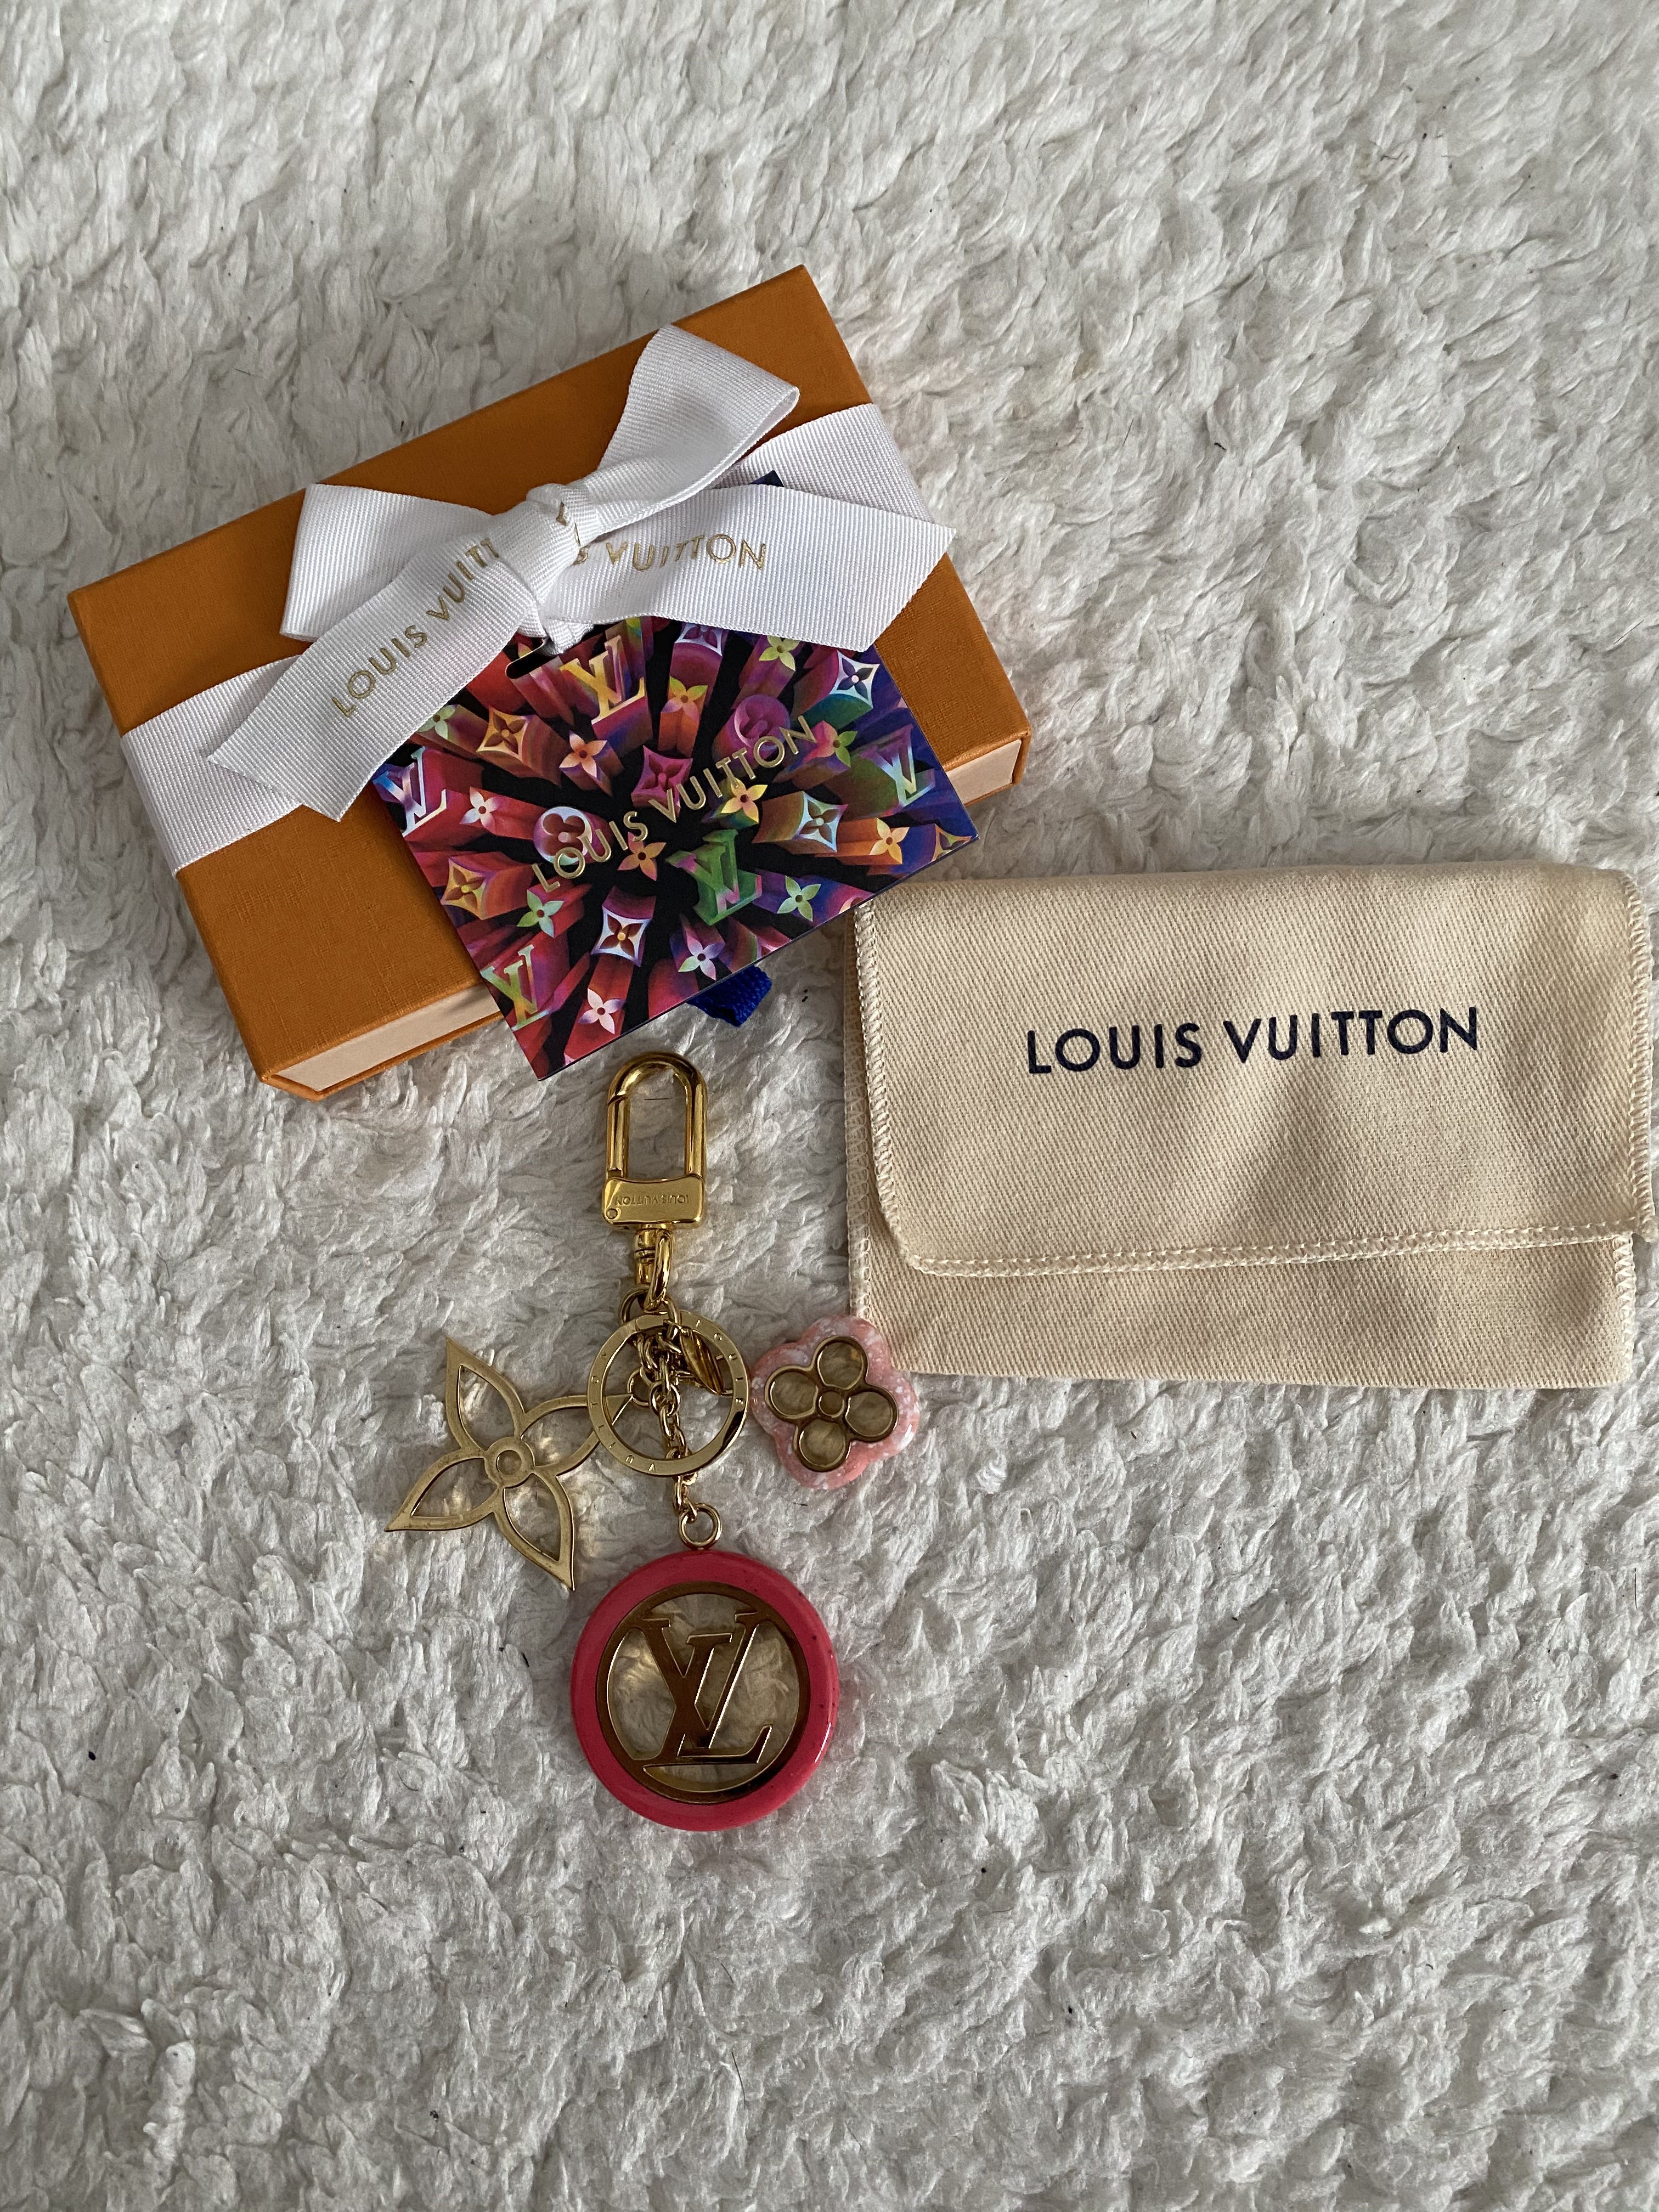 Louis Vuitton Vintage Goldtone Colorline Bag Charm, Best Price and Reviews